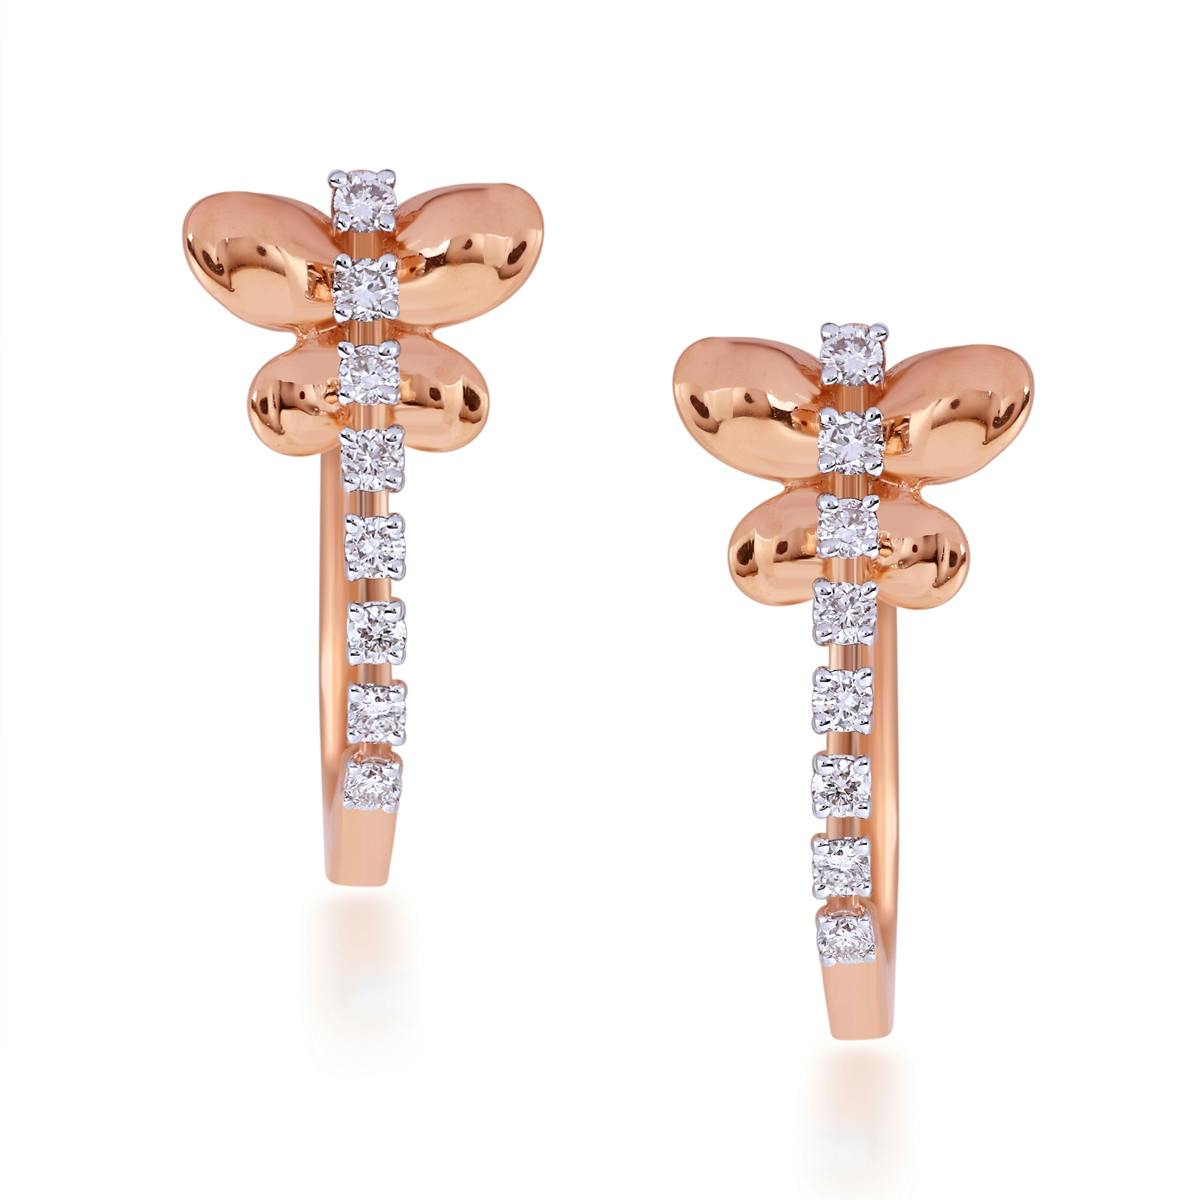 Quinci diamond earrings